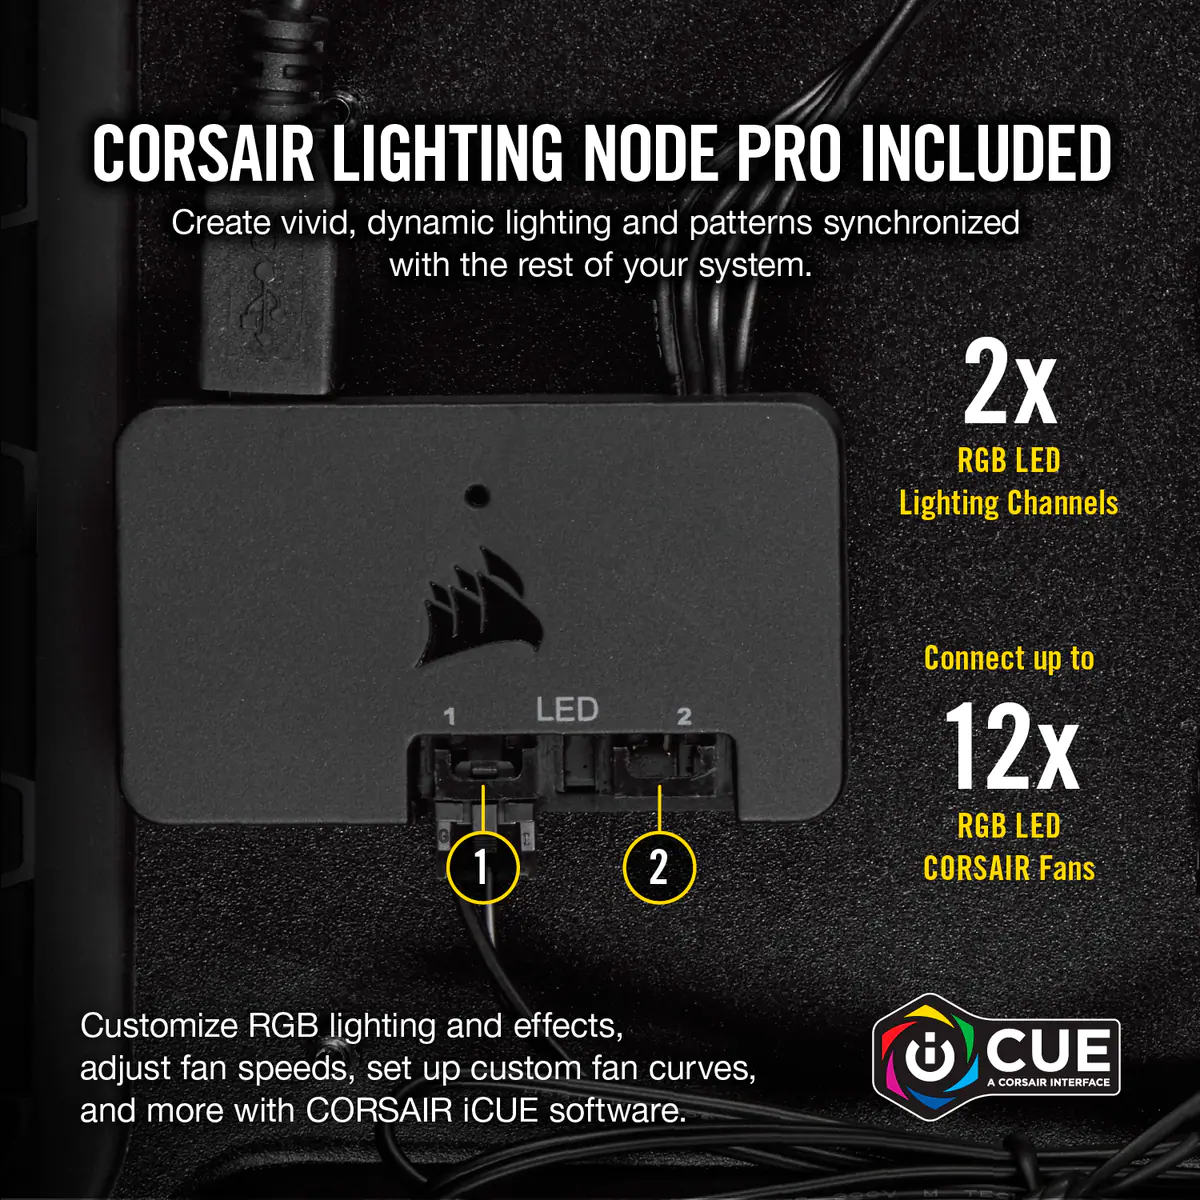 Fan Corsair LL140 RGB, 14 cm, 1300 RPM, 13.2 VDC, 4 pines, PWM Control (Pack de 2 unidades)